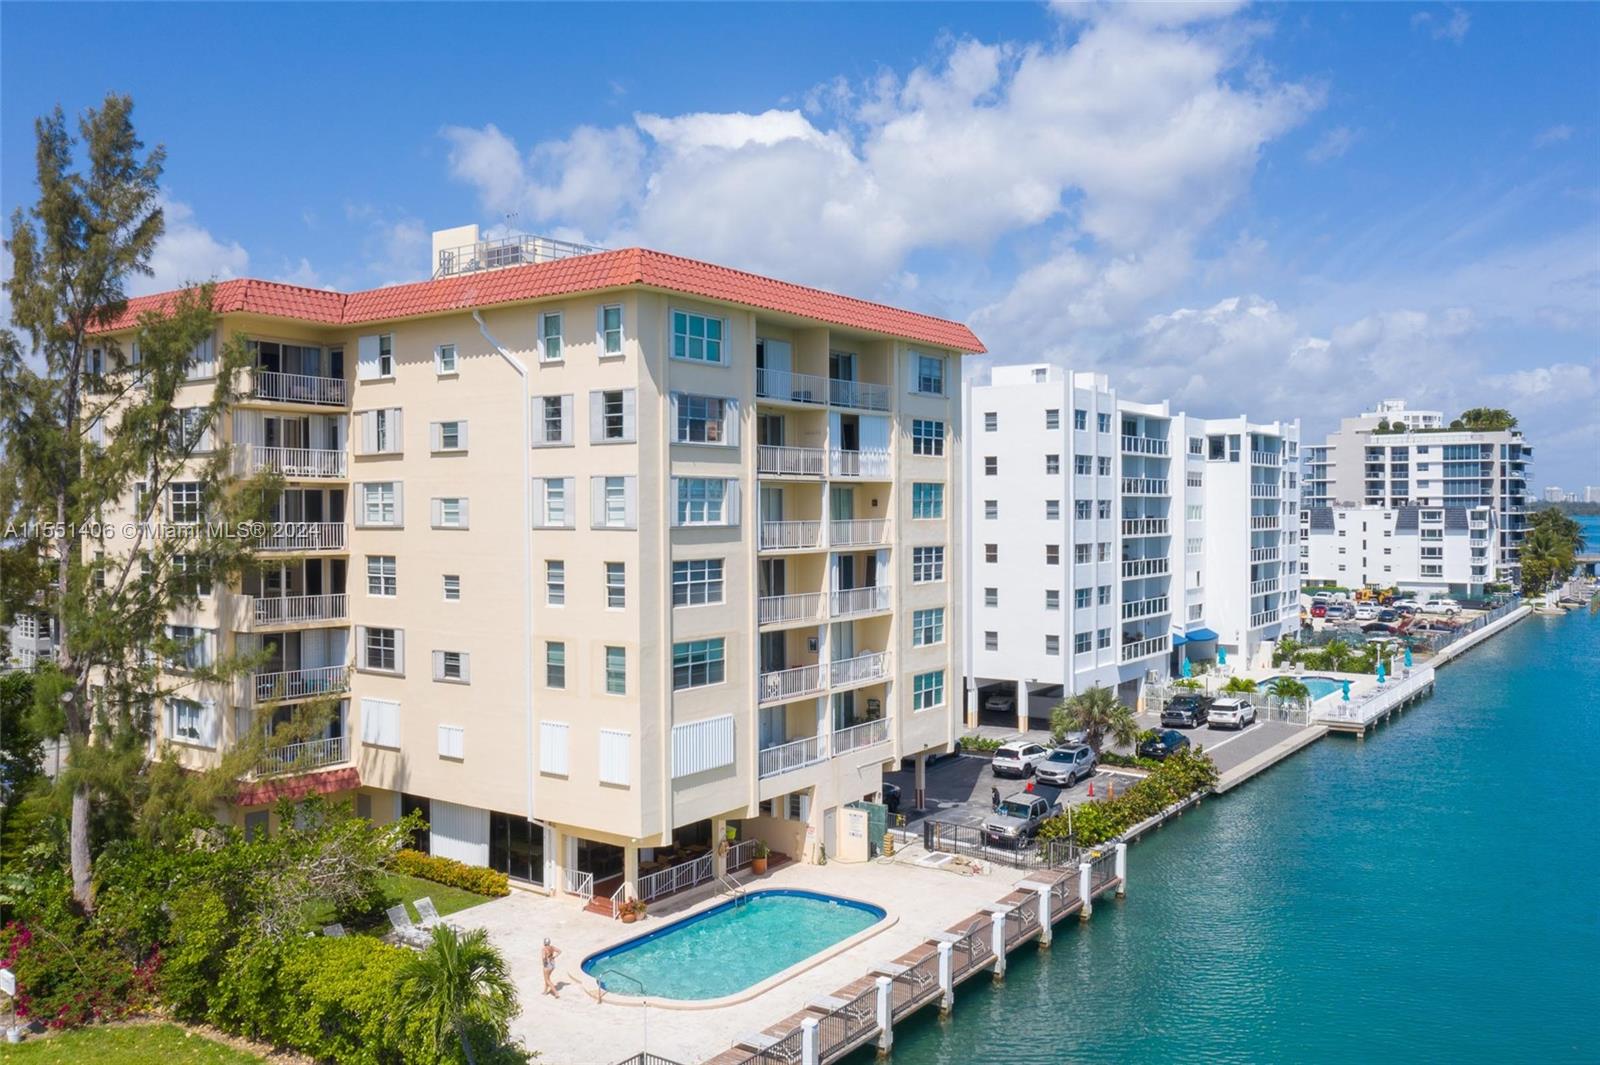 Property for Sale at 9341 E Bay Harbor Dr Ph D, Bay Harbor Islands, Miami-Dade County, Florida - Bedrooms: 2 
Bathrooms: 3  - $670,000